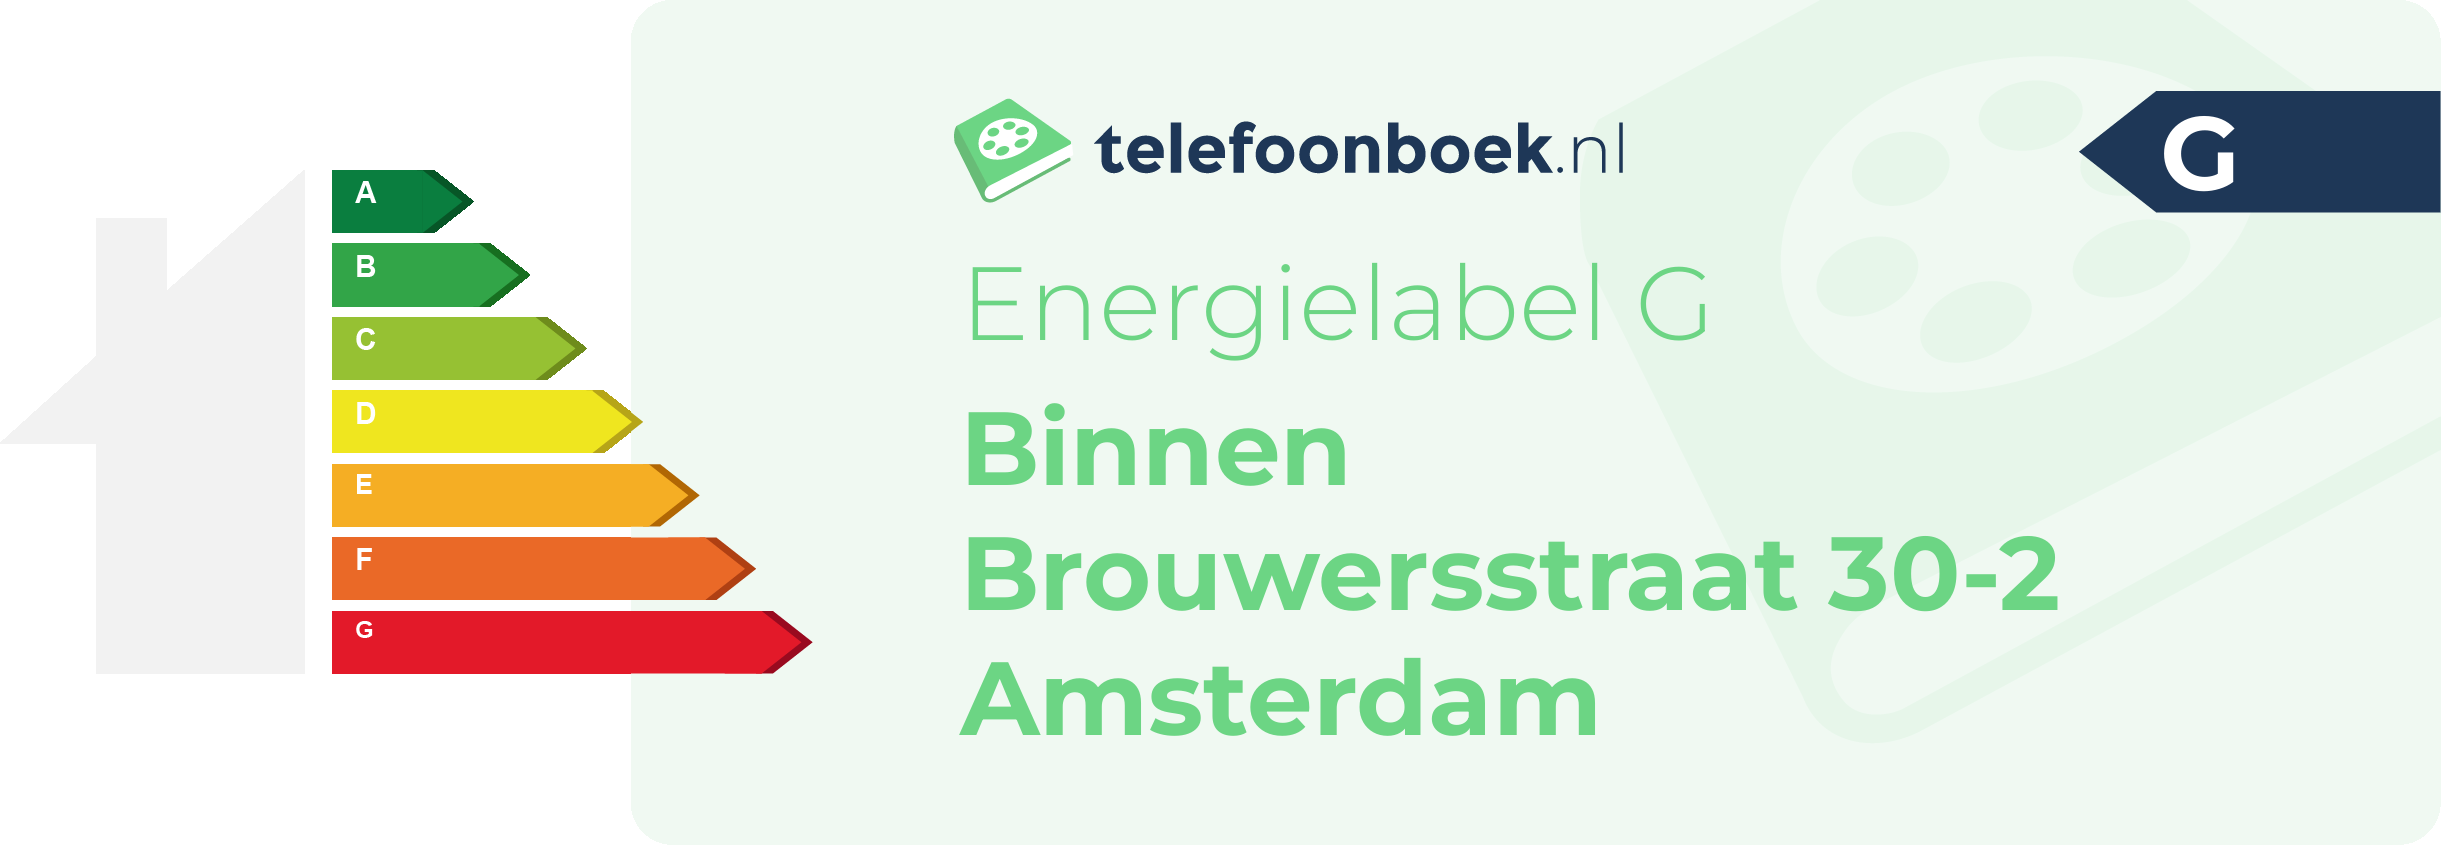 Energielabel Binnen Brouwersstraat 30-2 Amsterdam